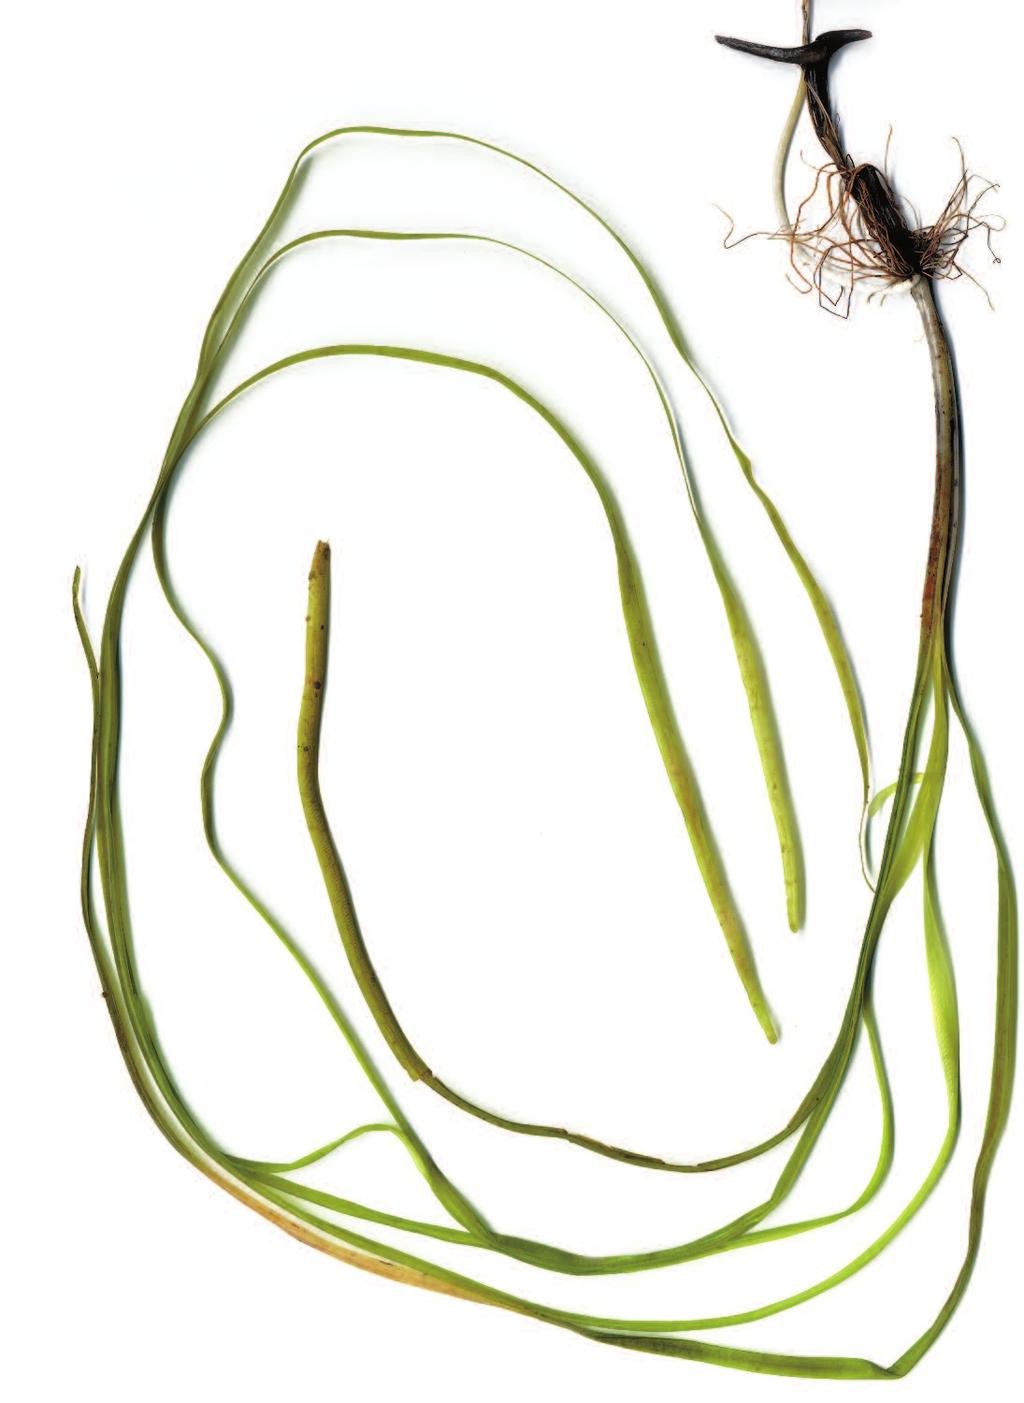 Water-celery (Eelgrass) Vallisneria americana leaf